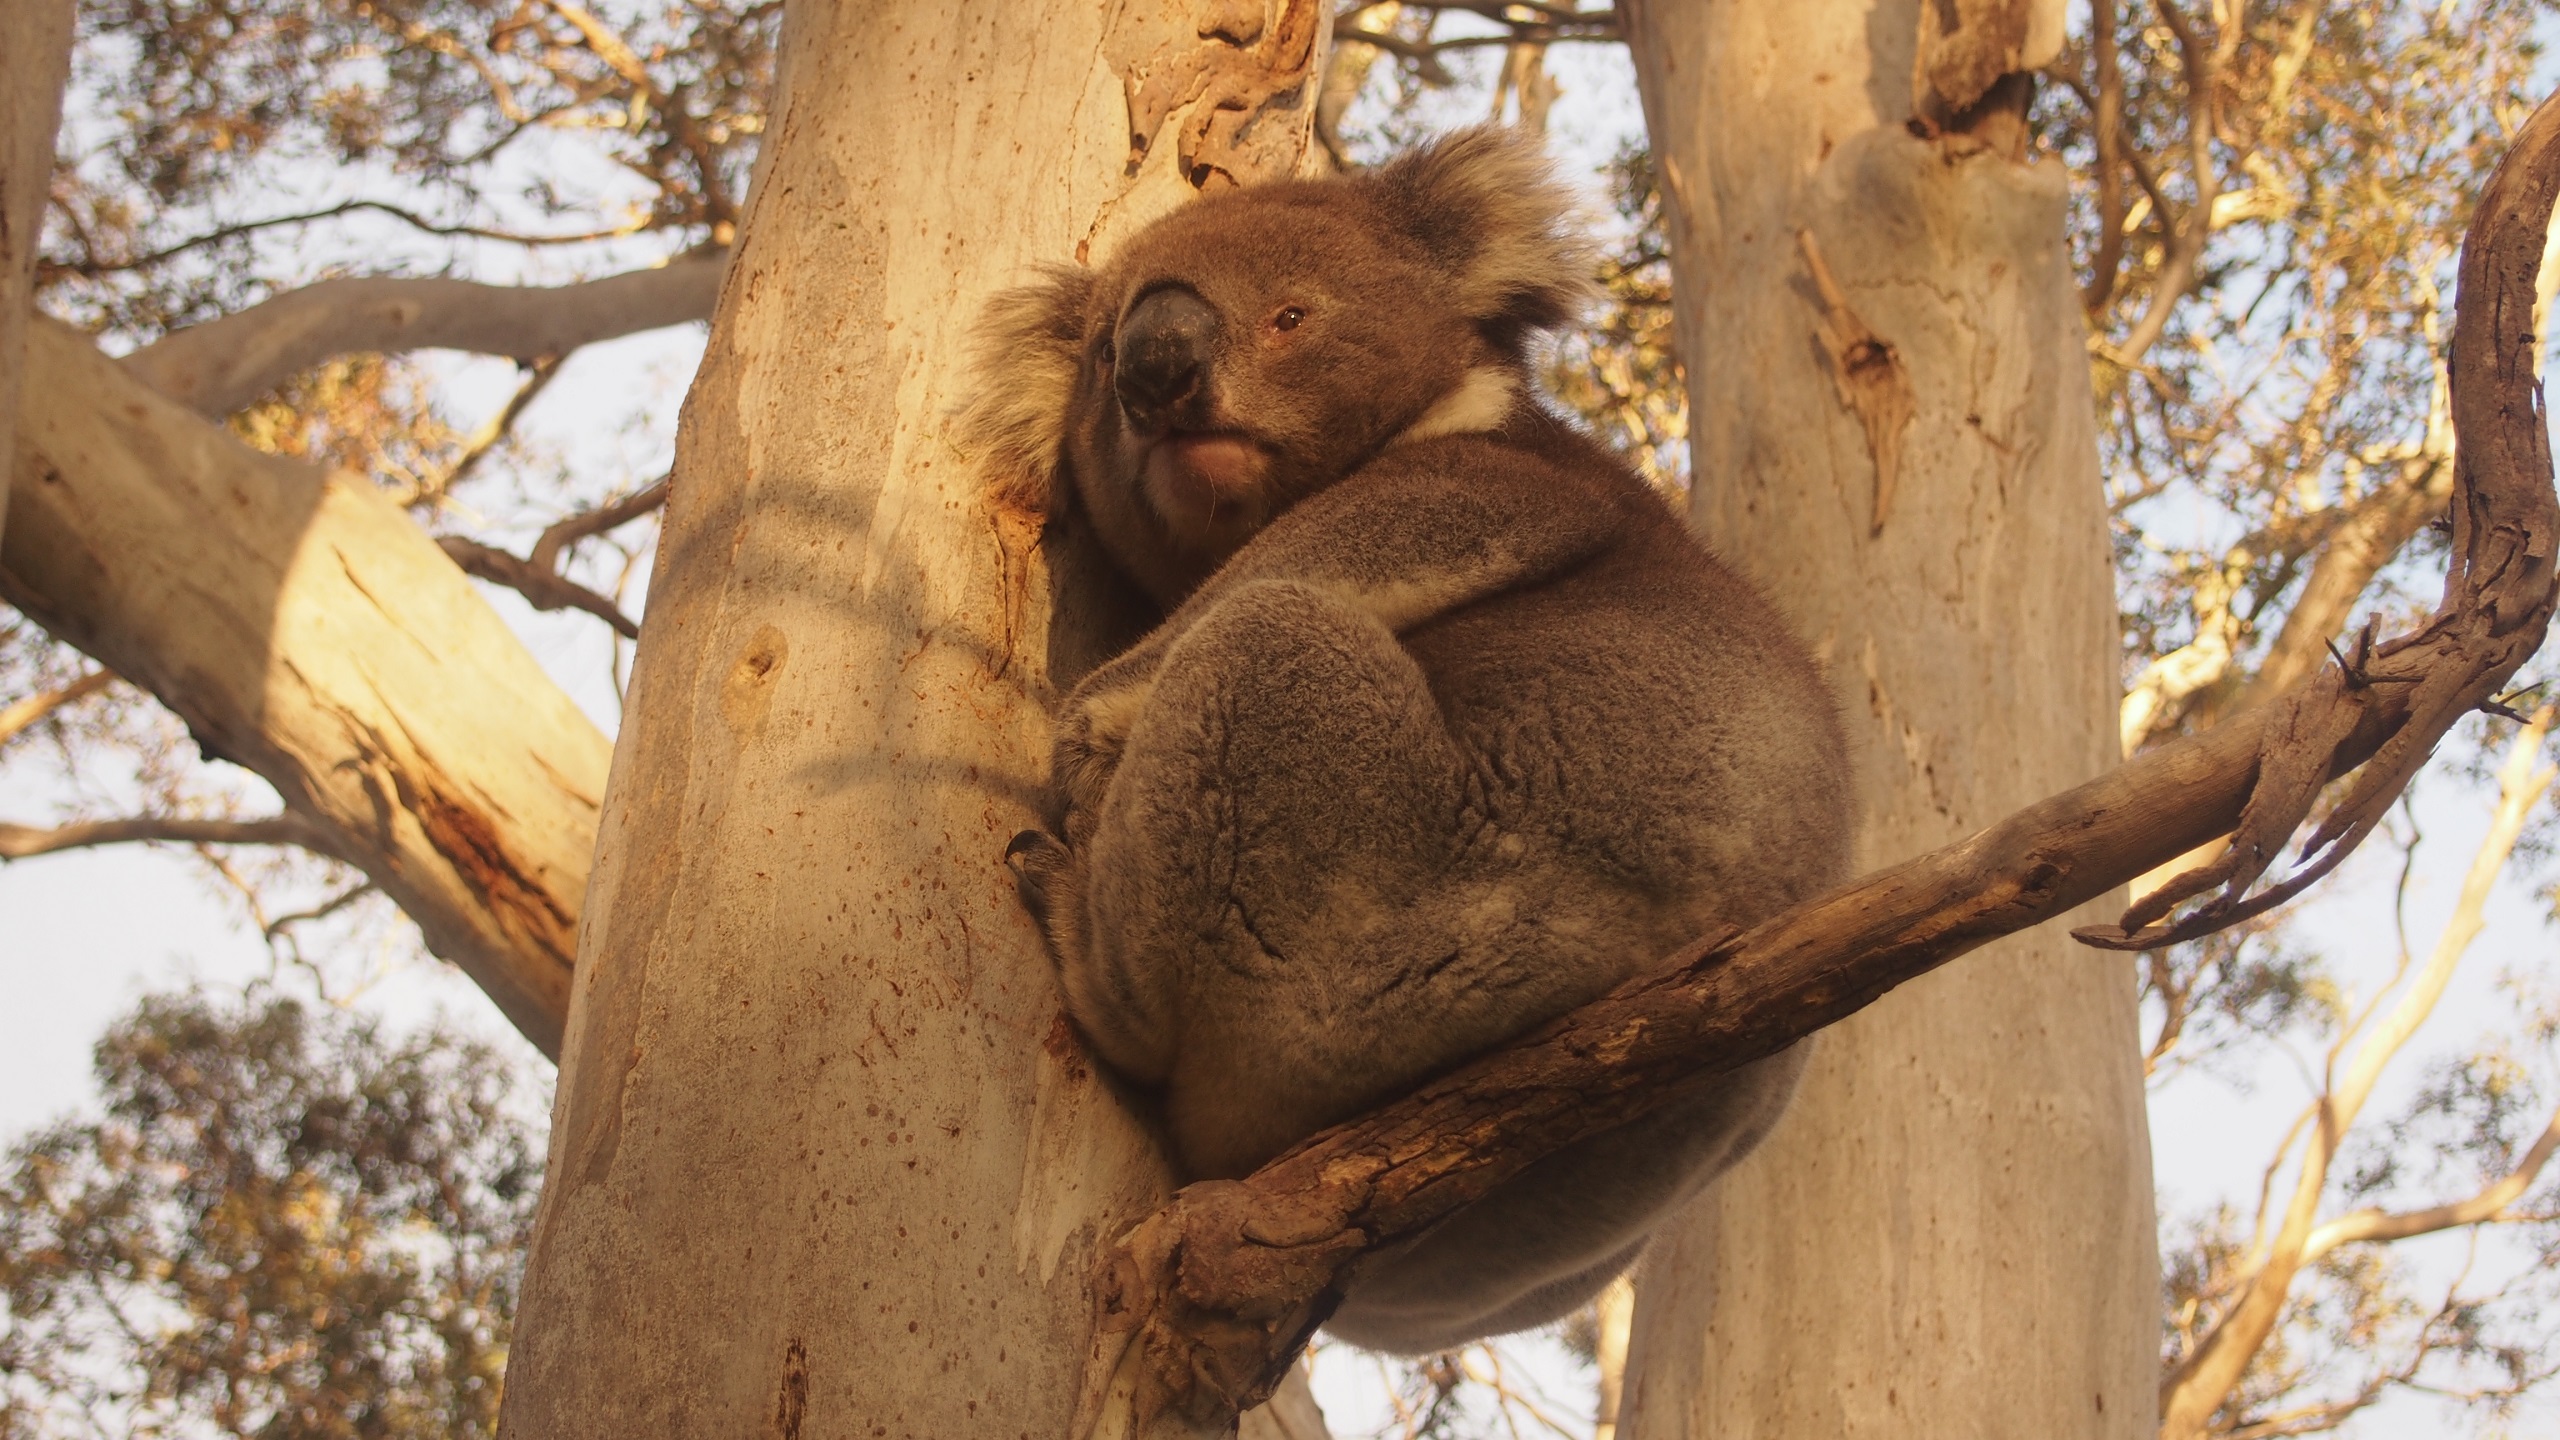 General 2560x1440 koalas Australia south australia wildlife nature animals marsupial trees branch outdoors